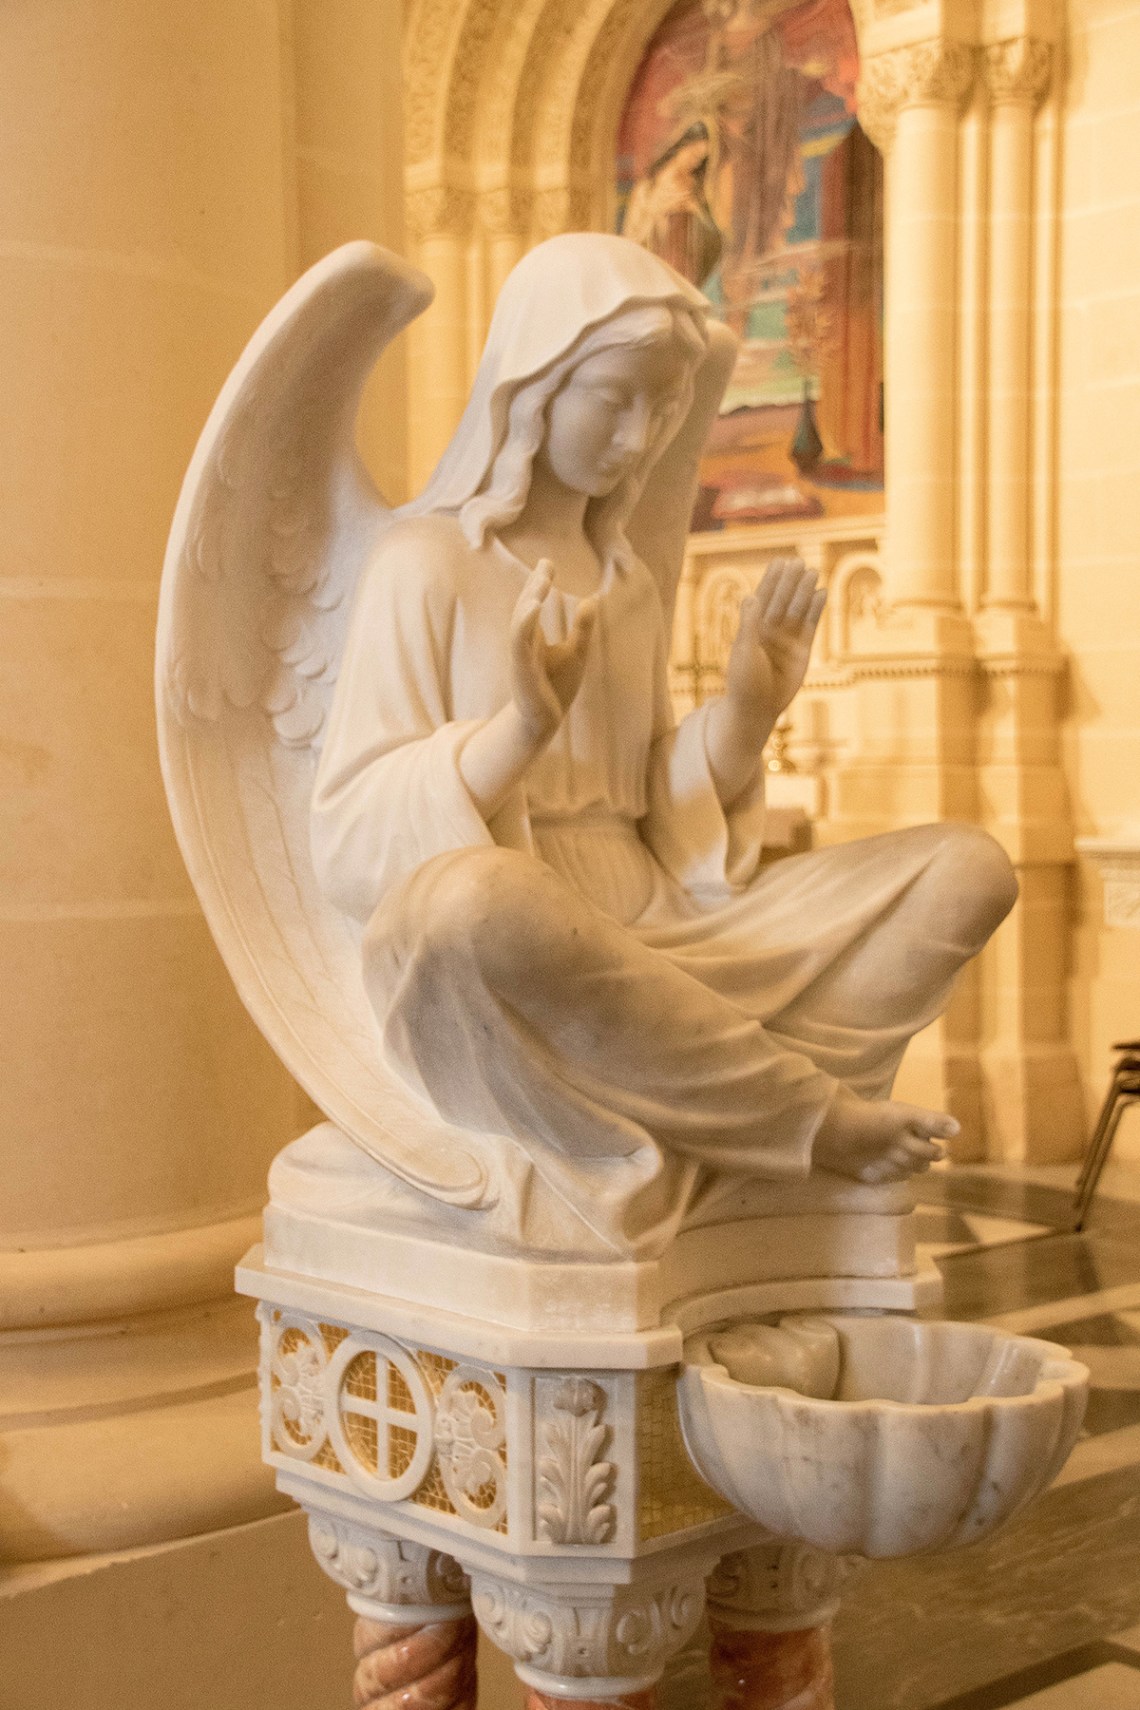 https://aleteia.org/wp-content/uploads/sites/2/2020/08/web3-Ta-Pinu-Gozo-Church-Marble-statue-of-Angel-Courtesy-of-ViewingMalta.jpg?quality=100&strip=all&w=1140